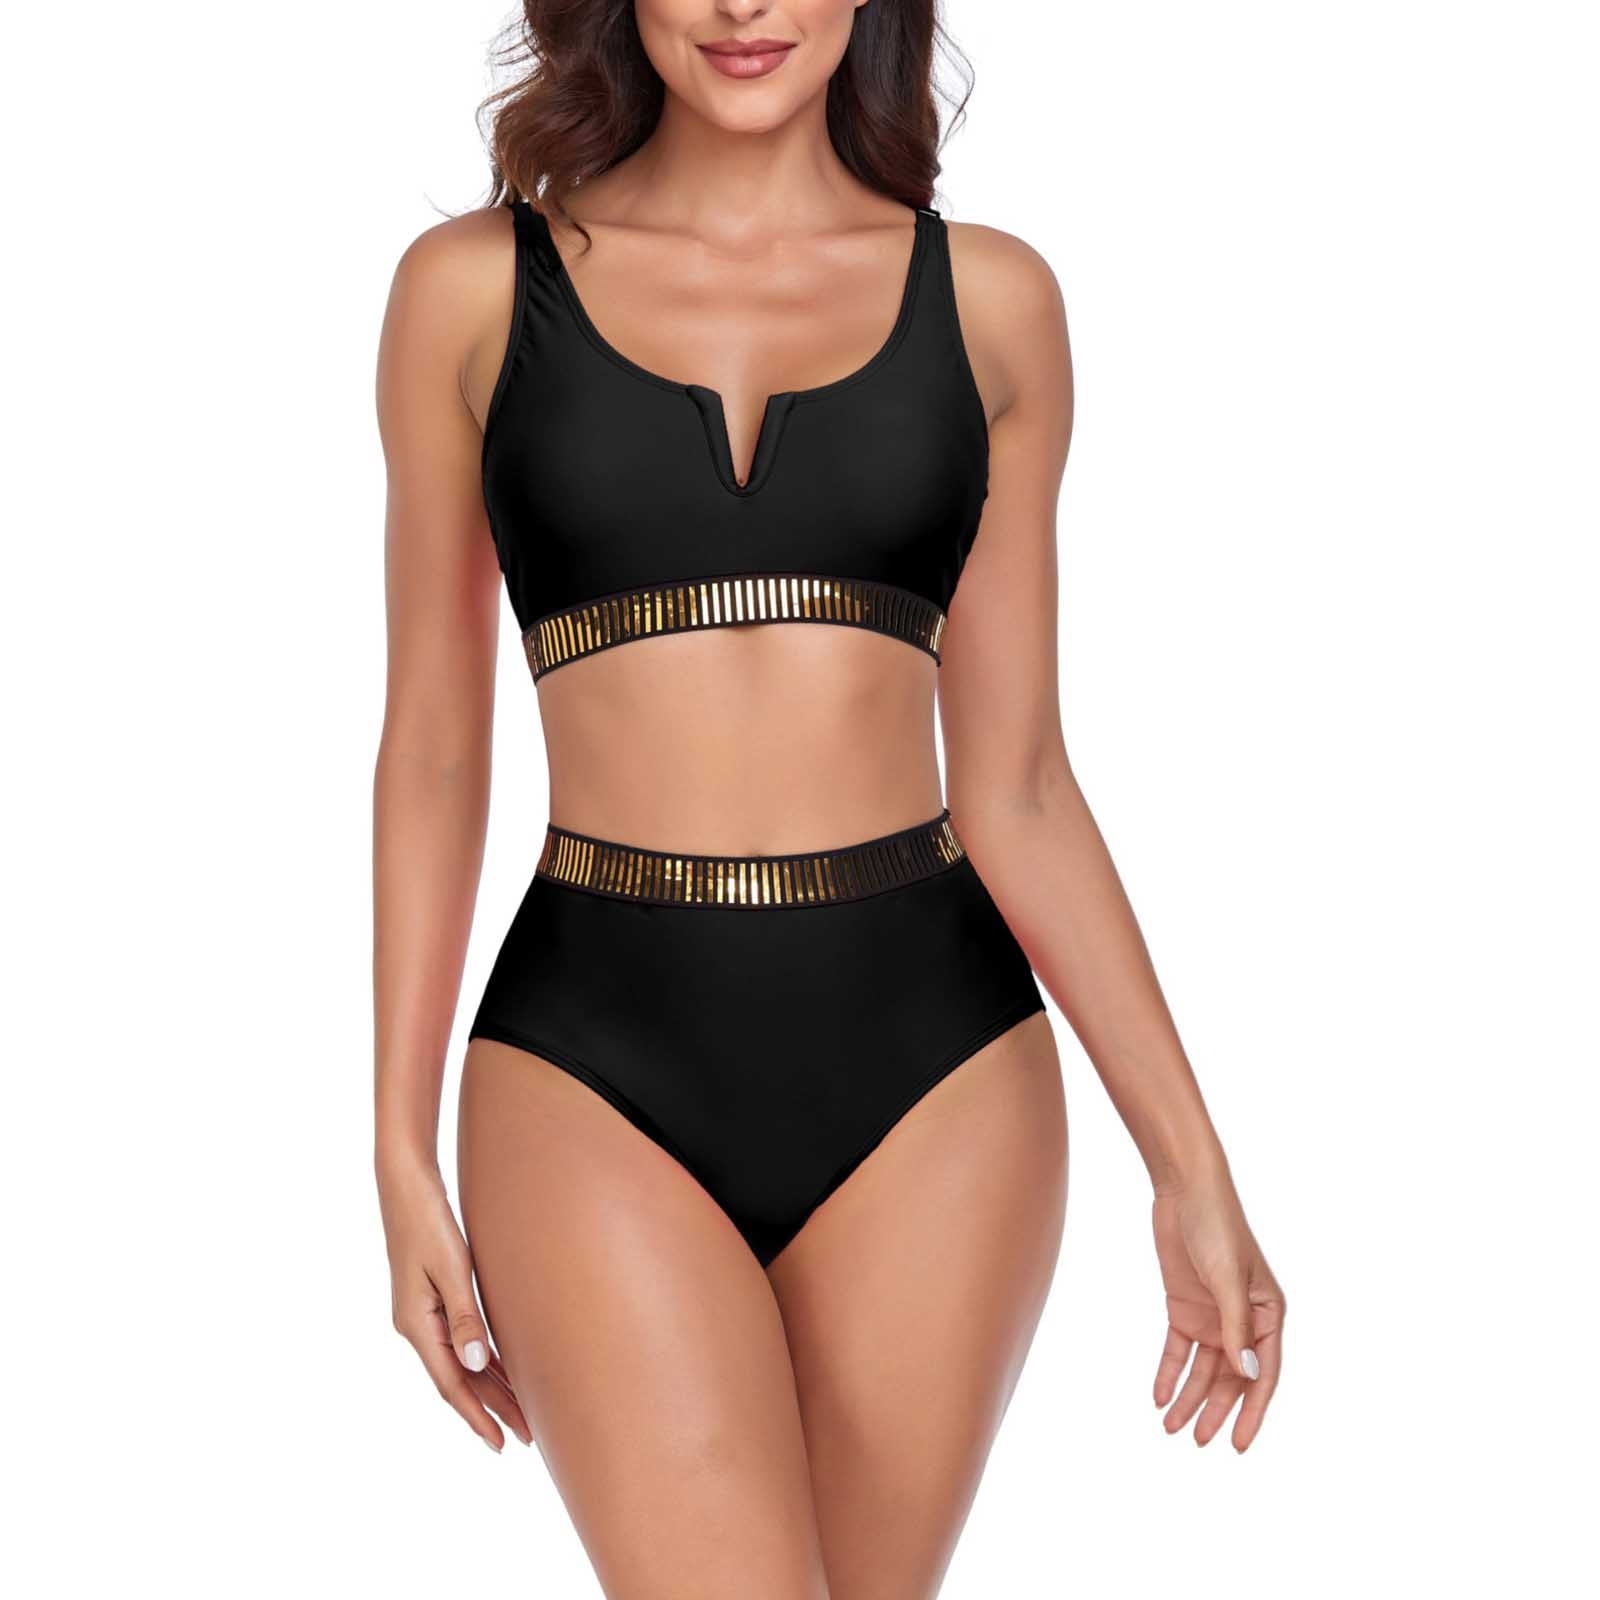 Finelylove 2 Piece Swimsuit For Women Padded Sport Bra Style Bikini Black XL  